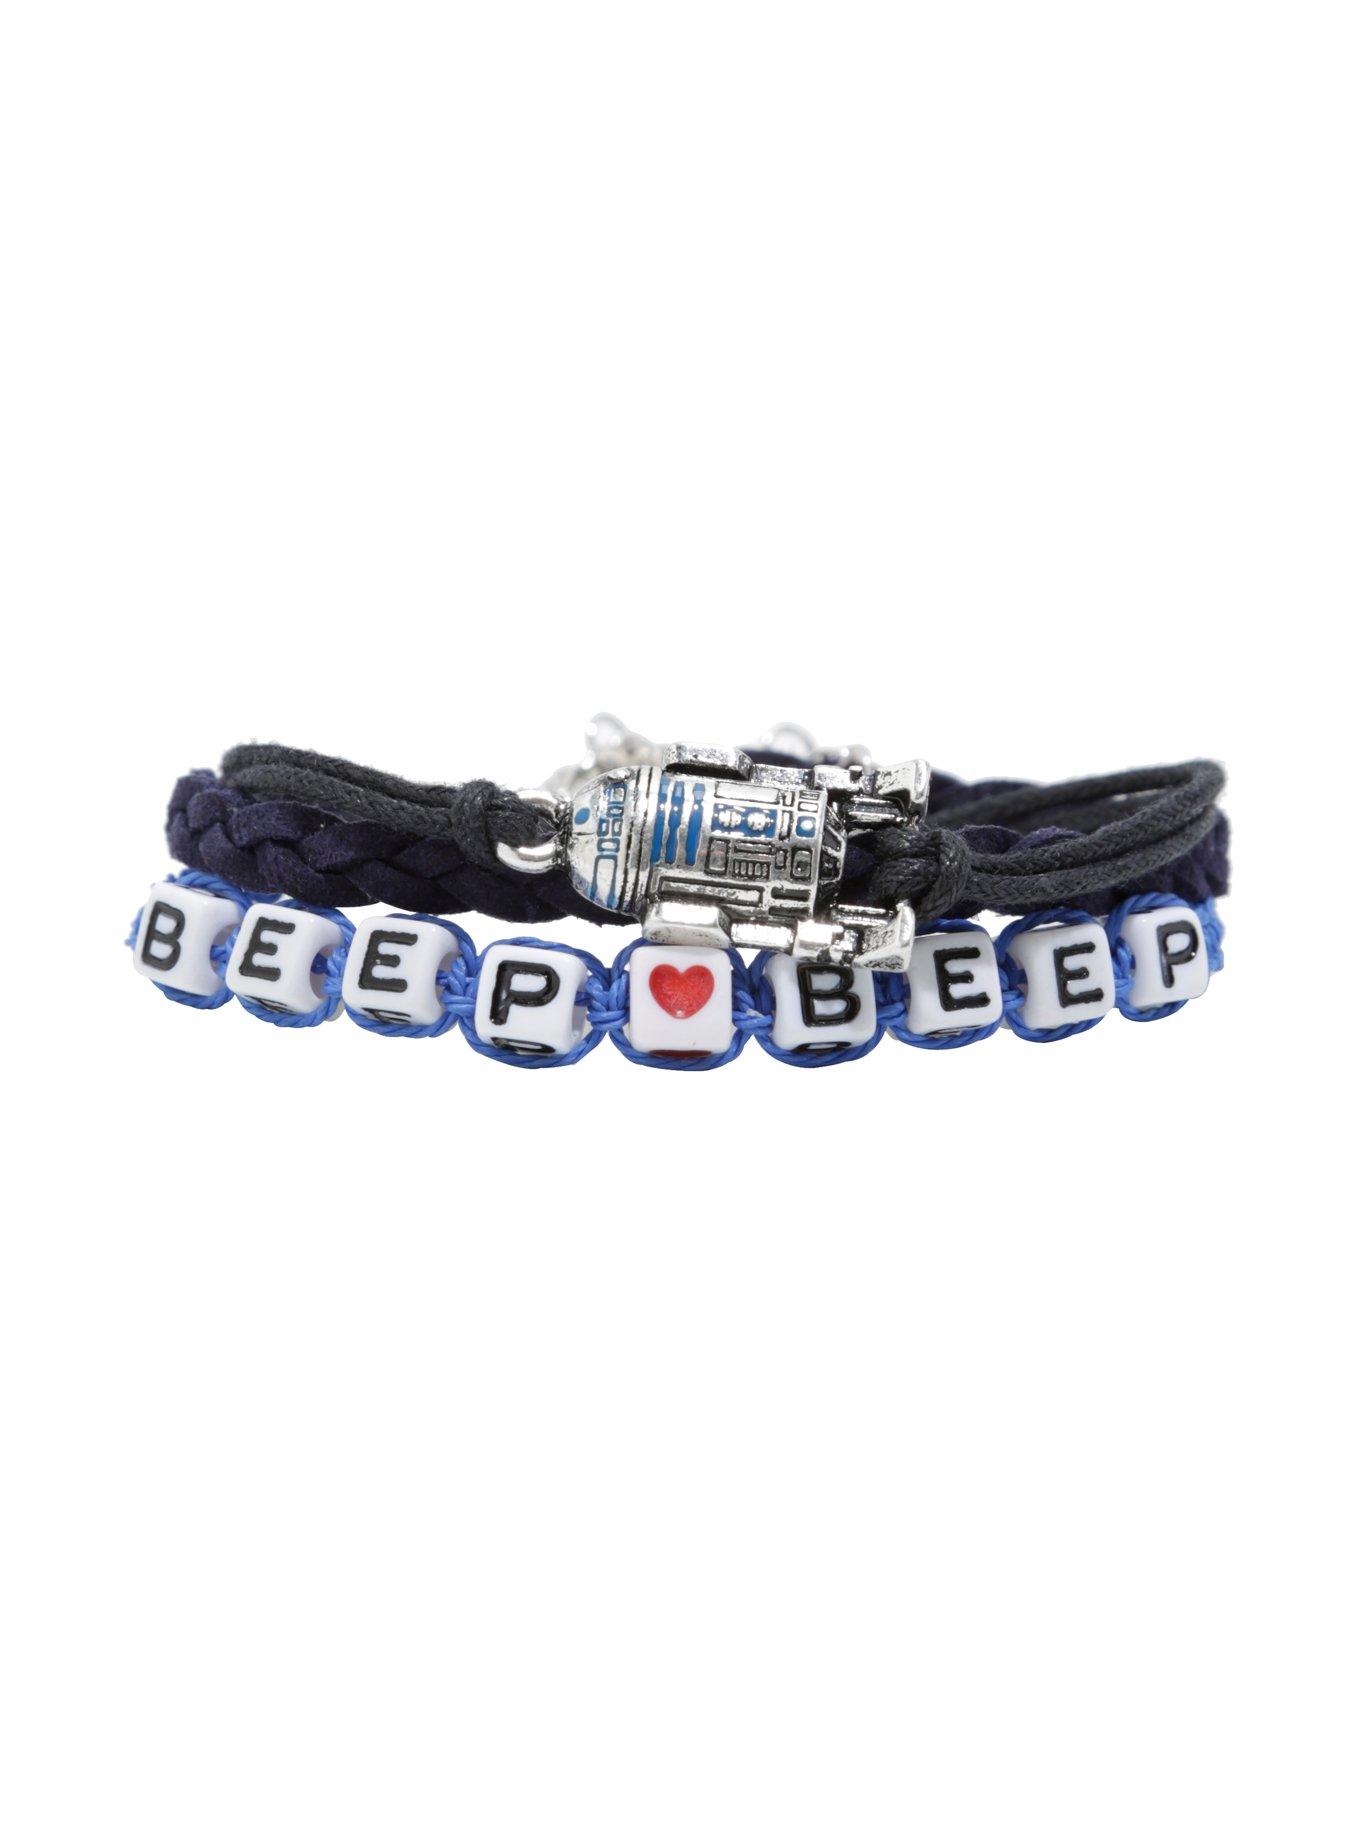 Star Wars R2-D2 Beep Beep Cord Bracelet Set, , alternate